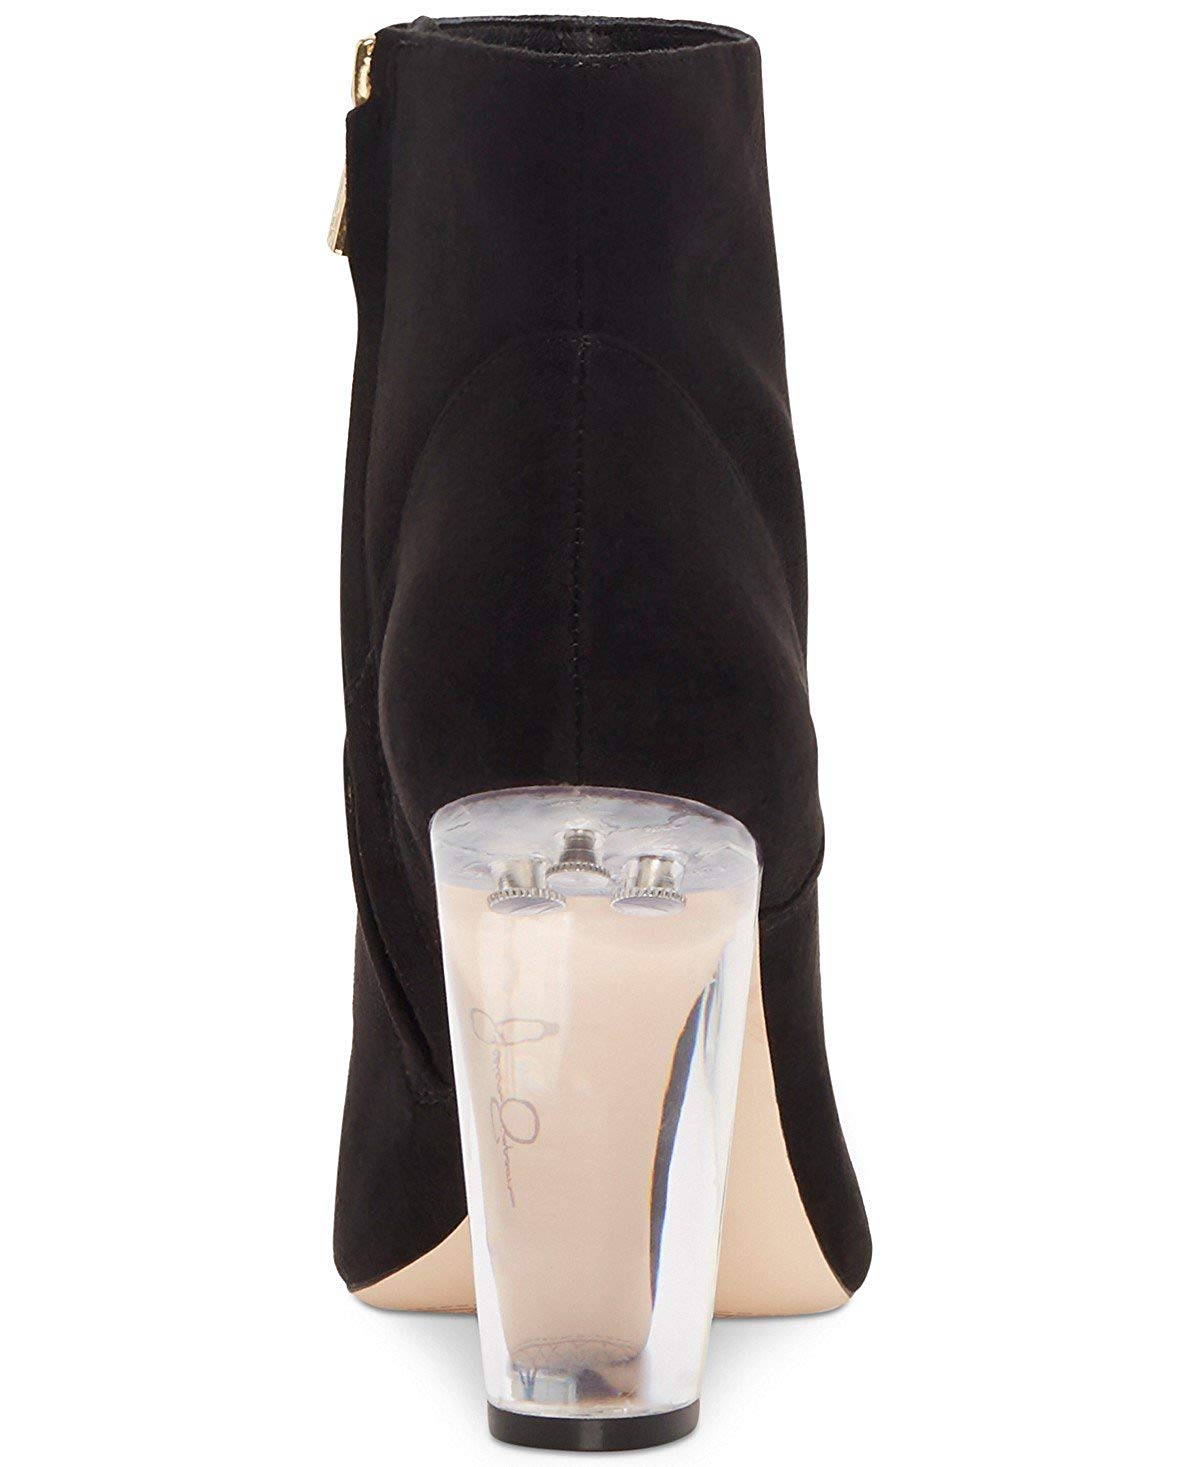 Jessica Simpson Womens Tarek Fabric Closed Toe Mid-Calf Fashion Boots | eBay1200 x 1467